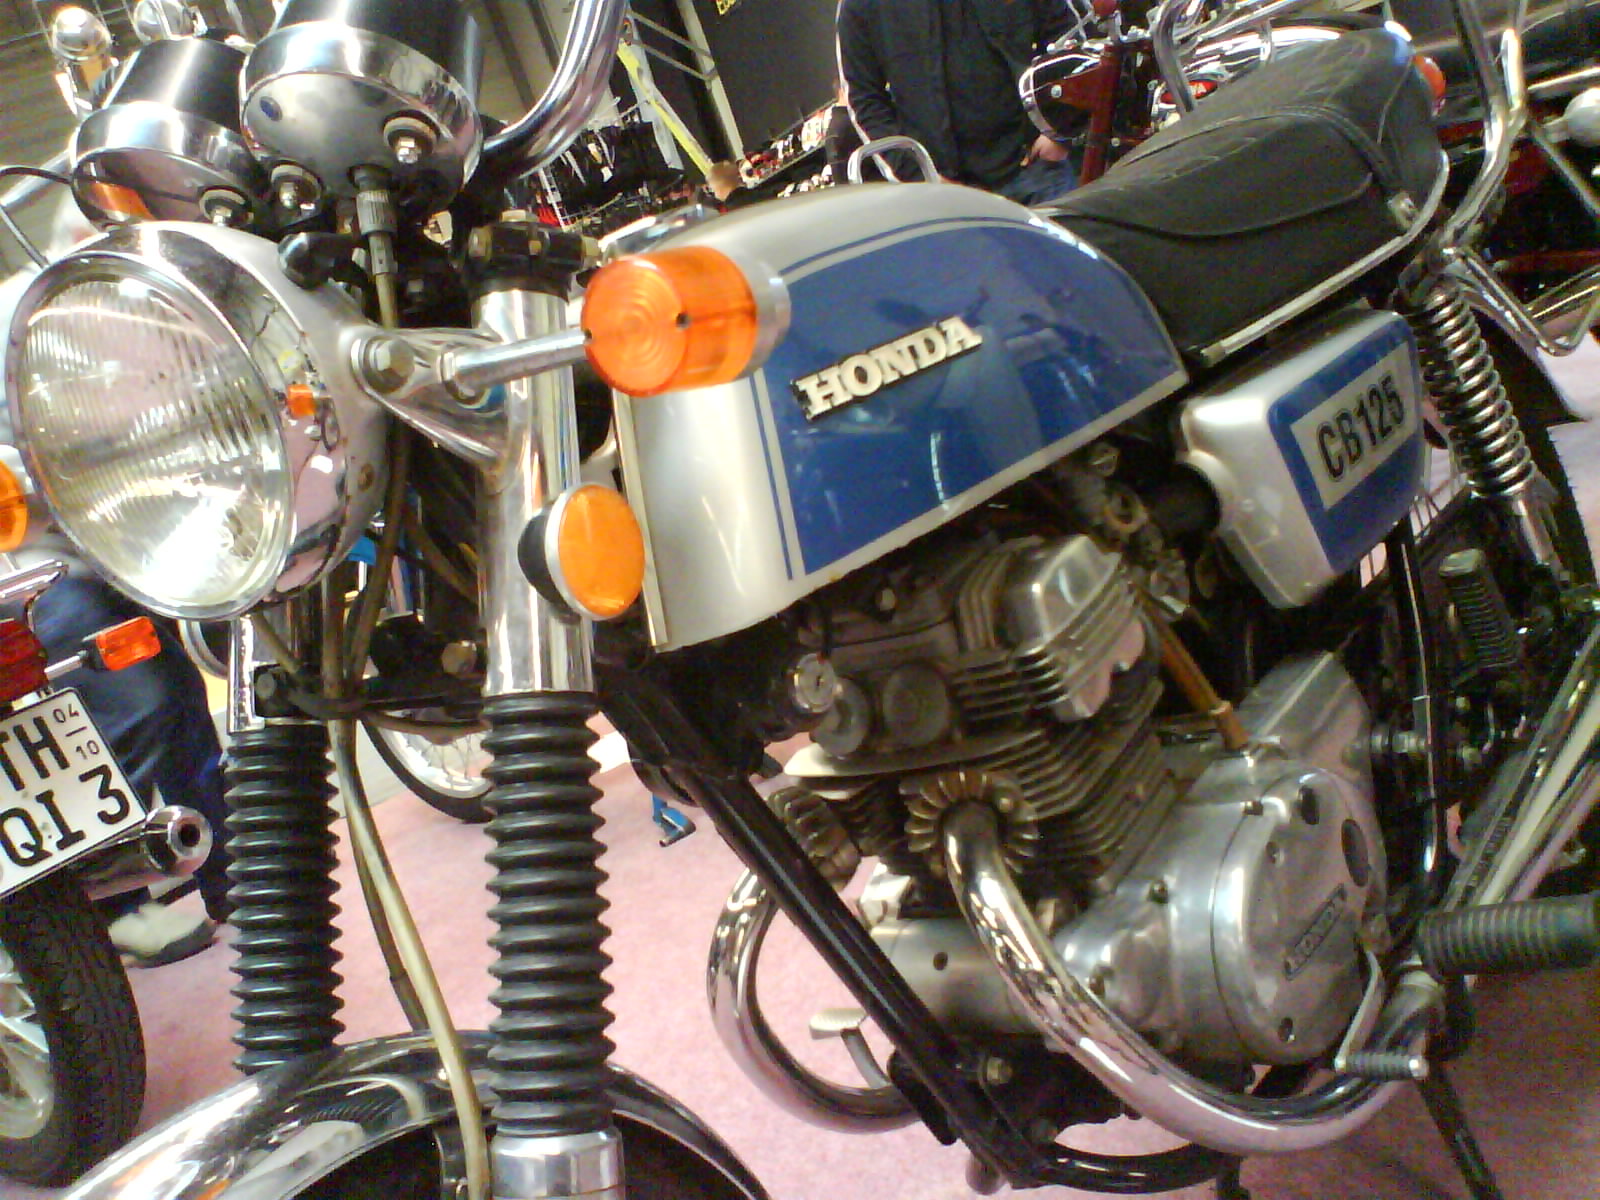 108 Modifikasi Motor Cb Twin 125 Modifikasi Motor Honda CB Terbaru